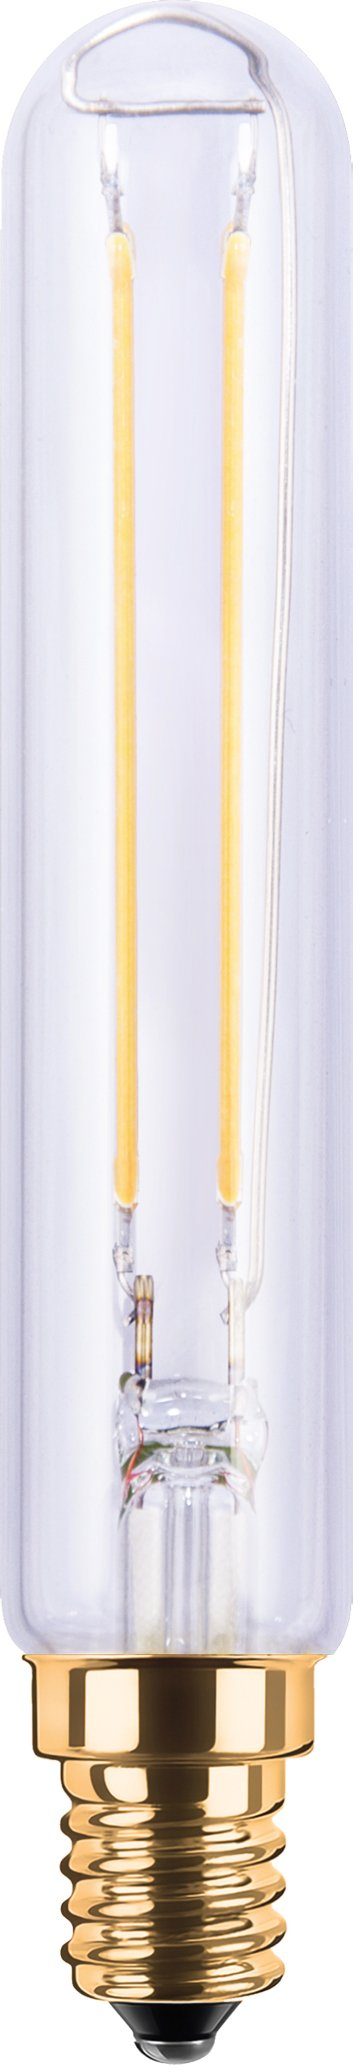 SEGULA LED-Leuchtmittel Vintage Line, E14, 1 St., Warmweiß, dimmbar, Tube klar, E27